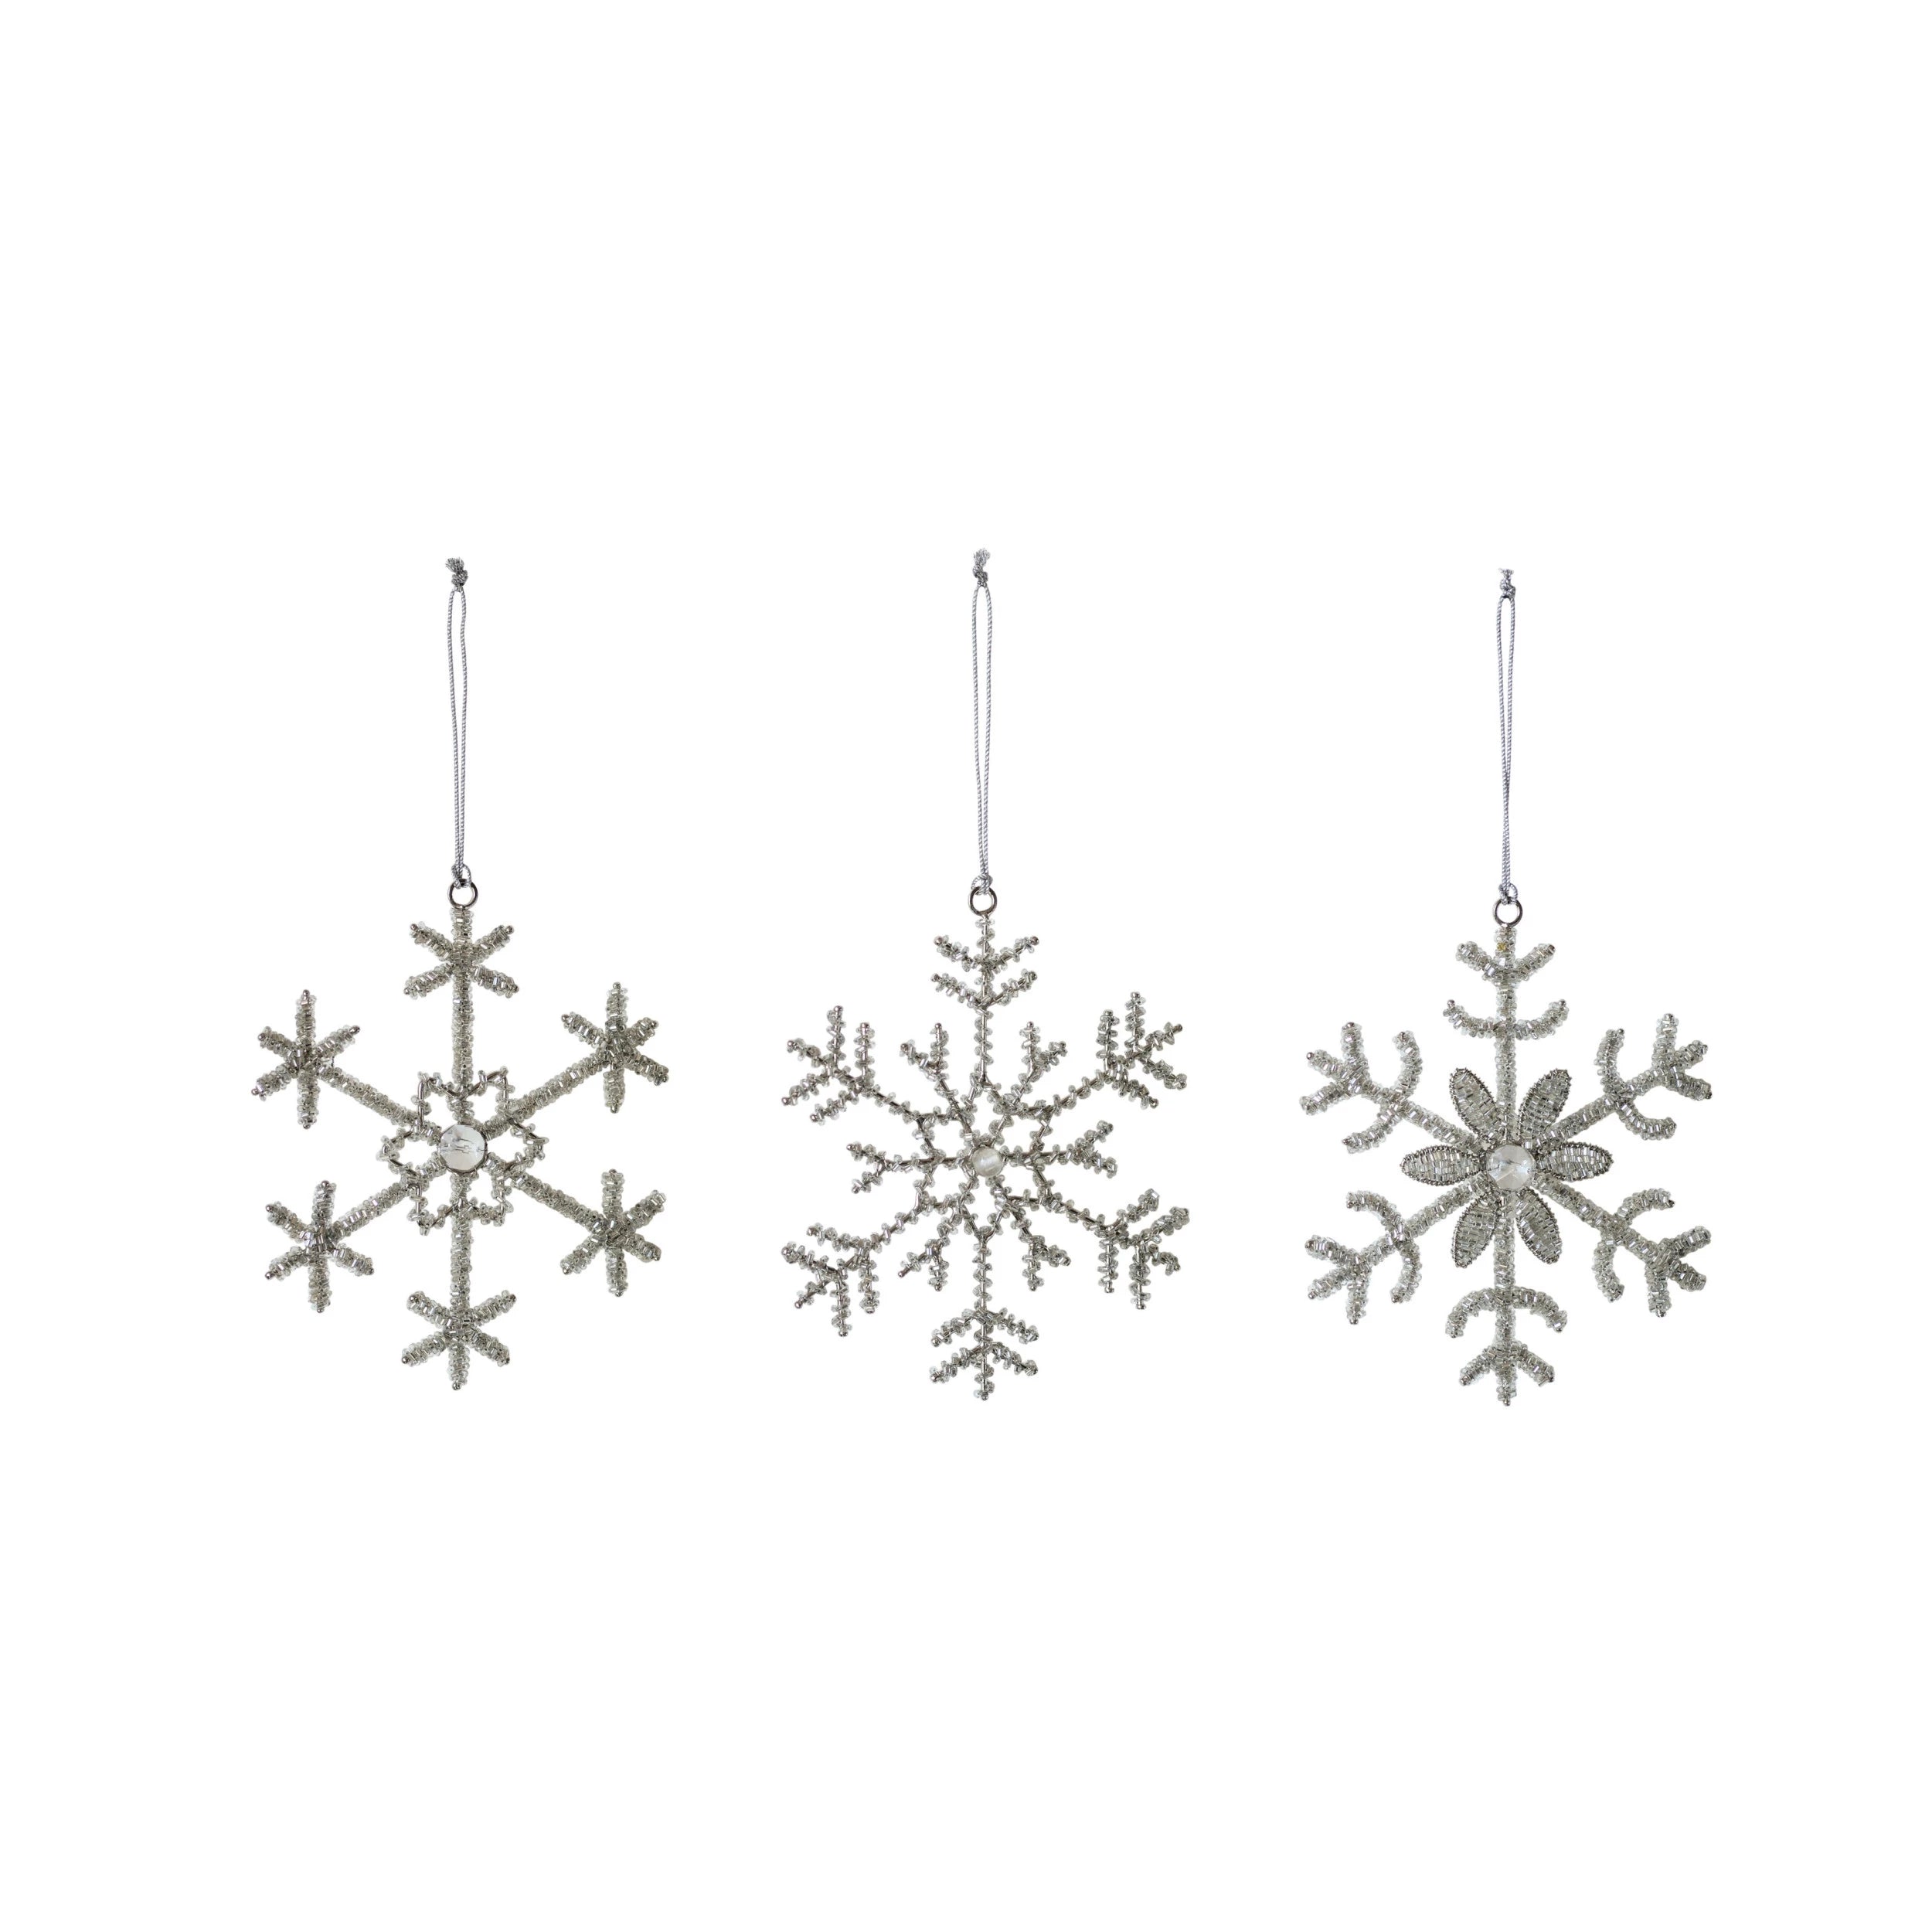 Jewel Snowflake Ornament